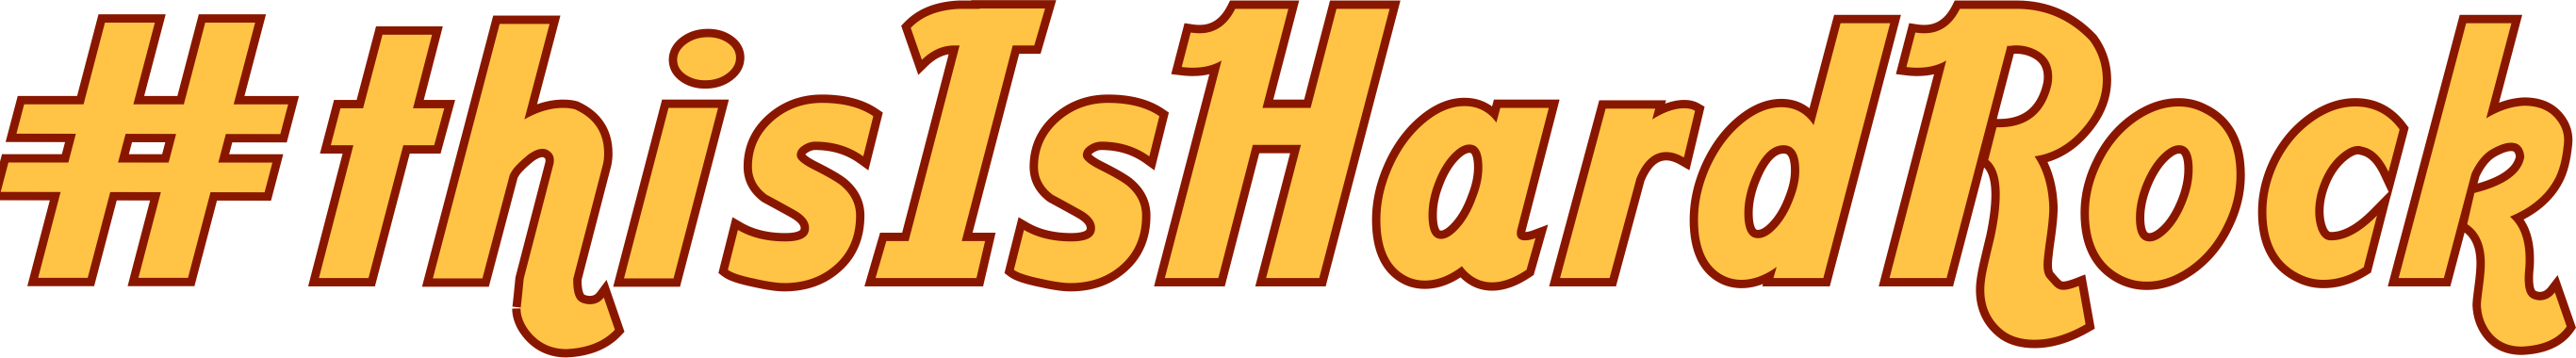 thisIsHardrock-Logo